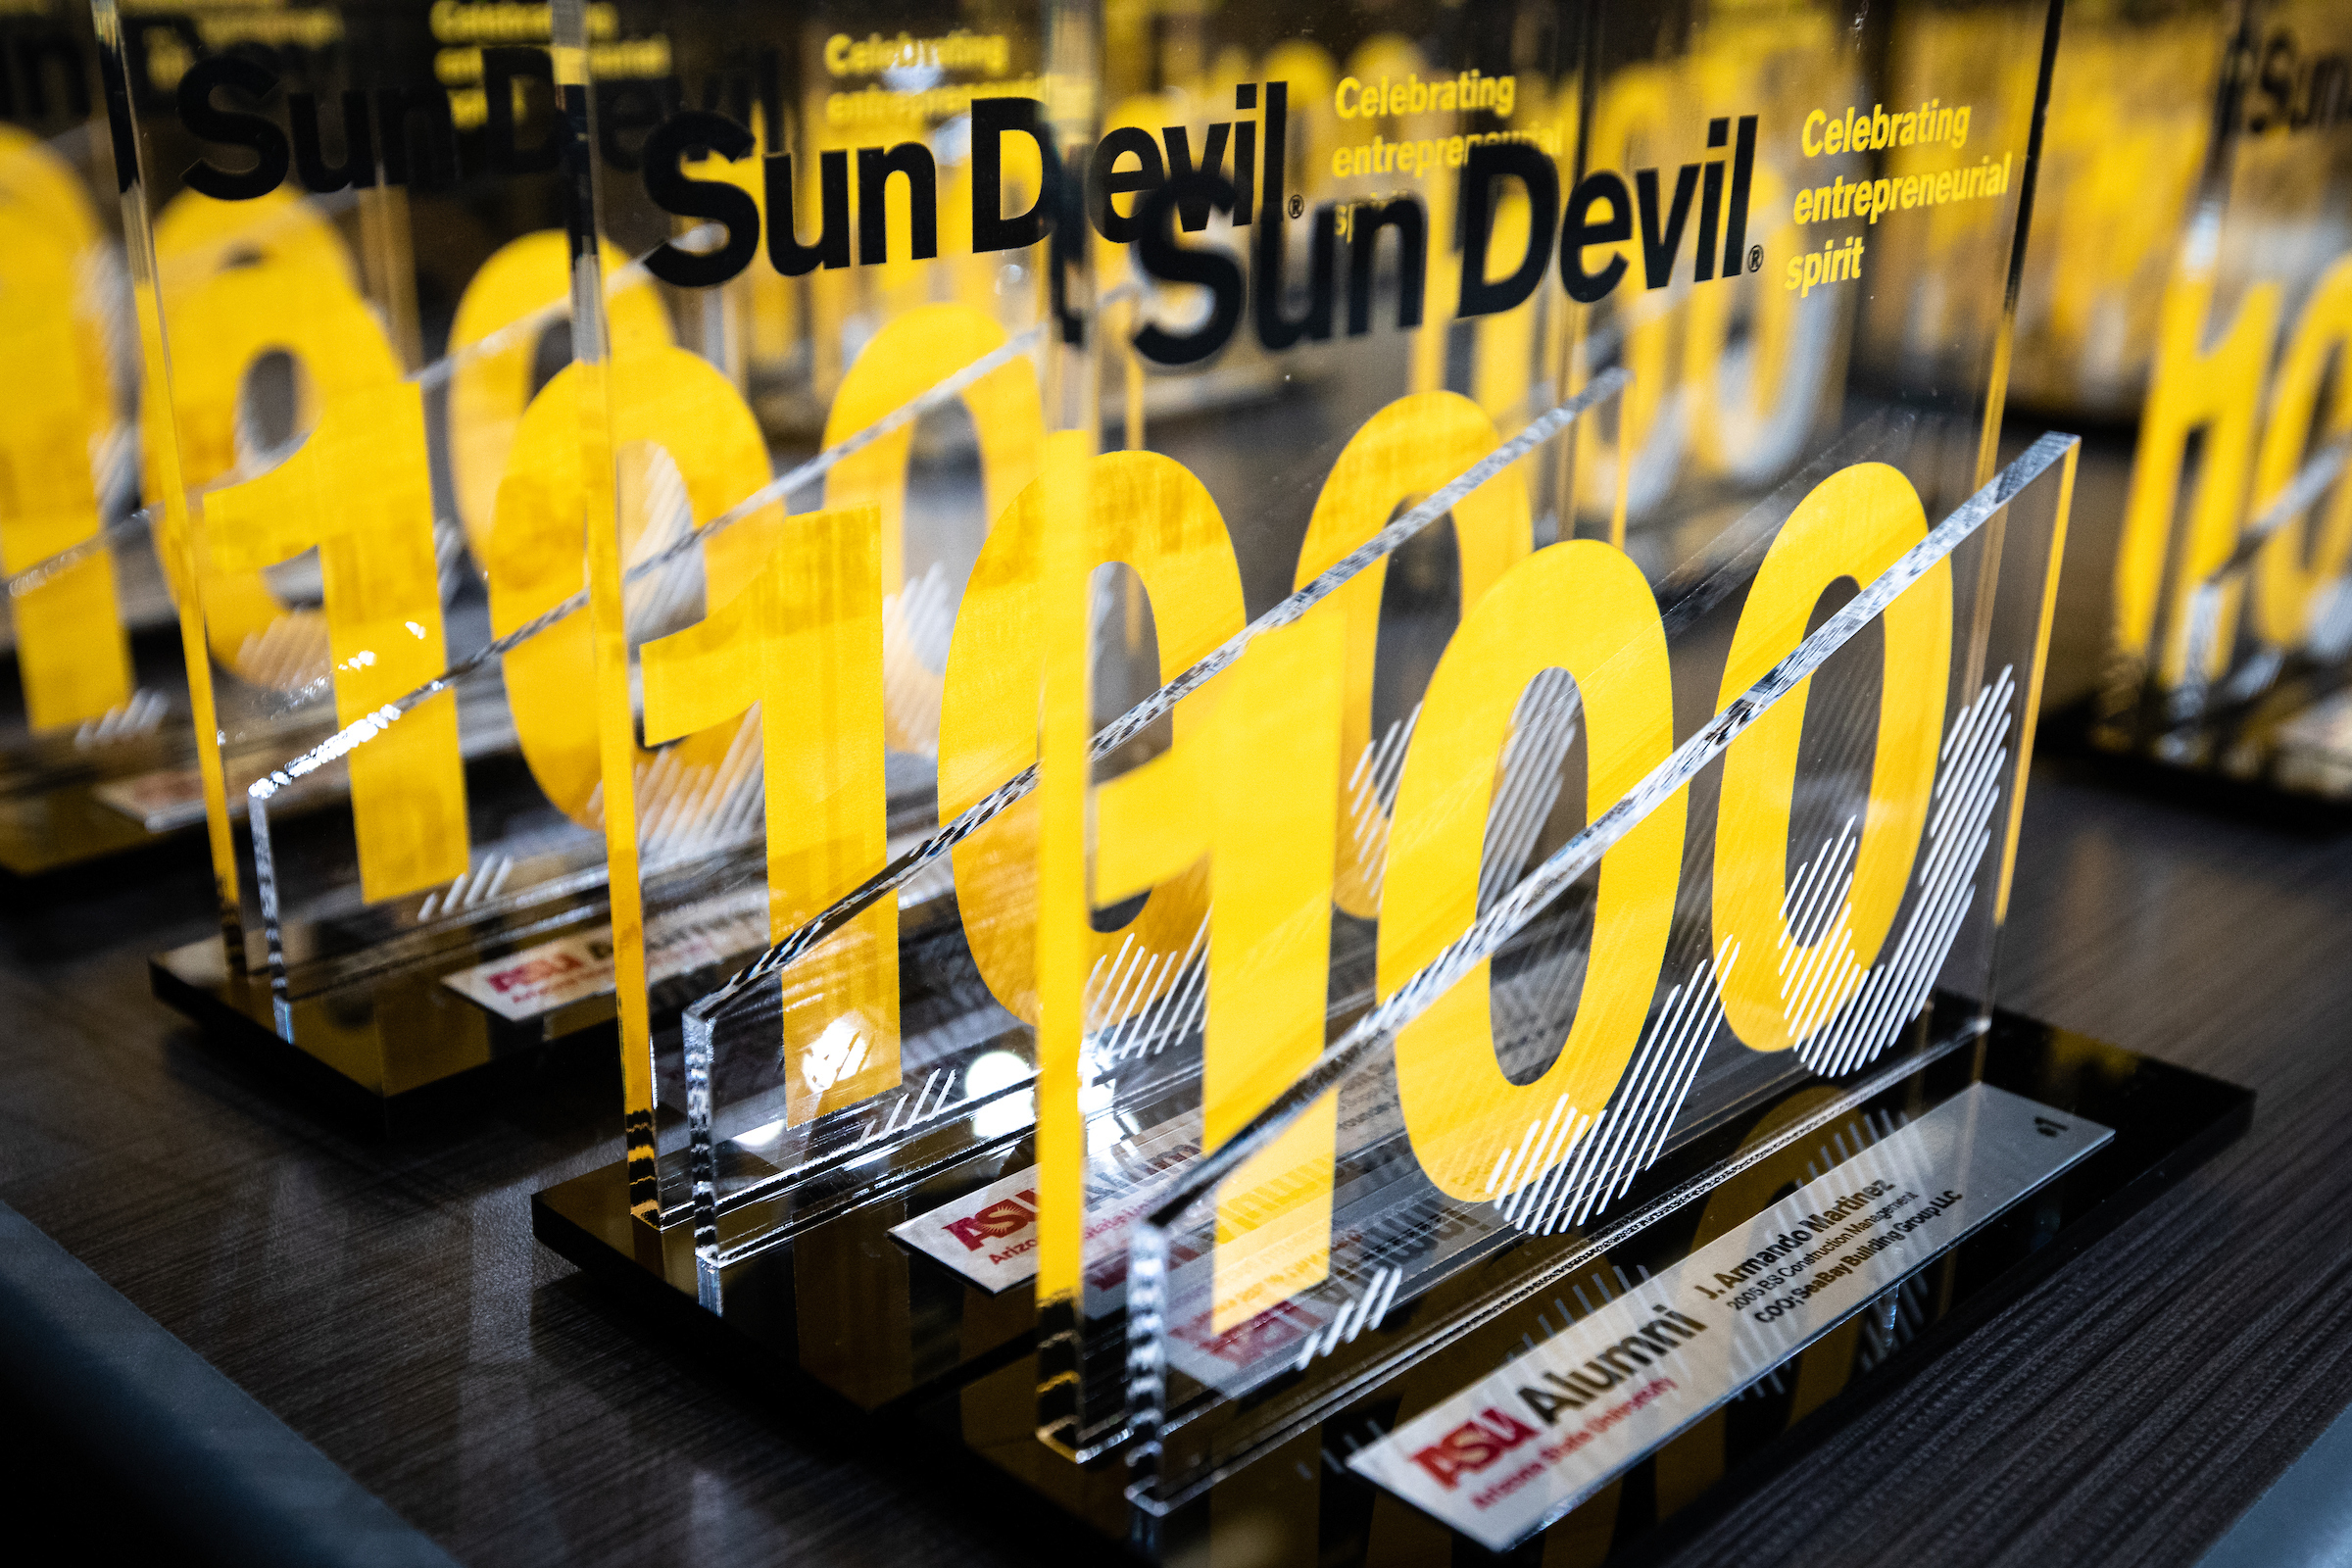 Sun Devil 100 awards fifth annual luncheon